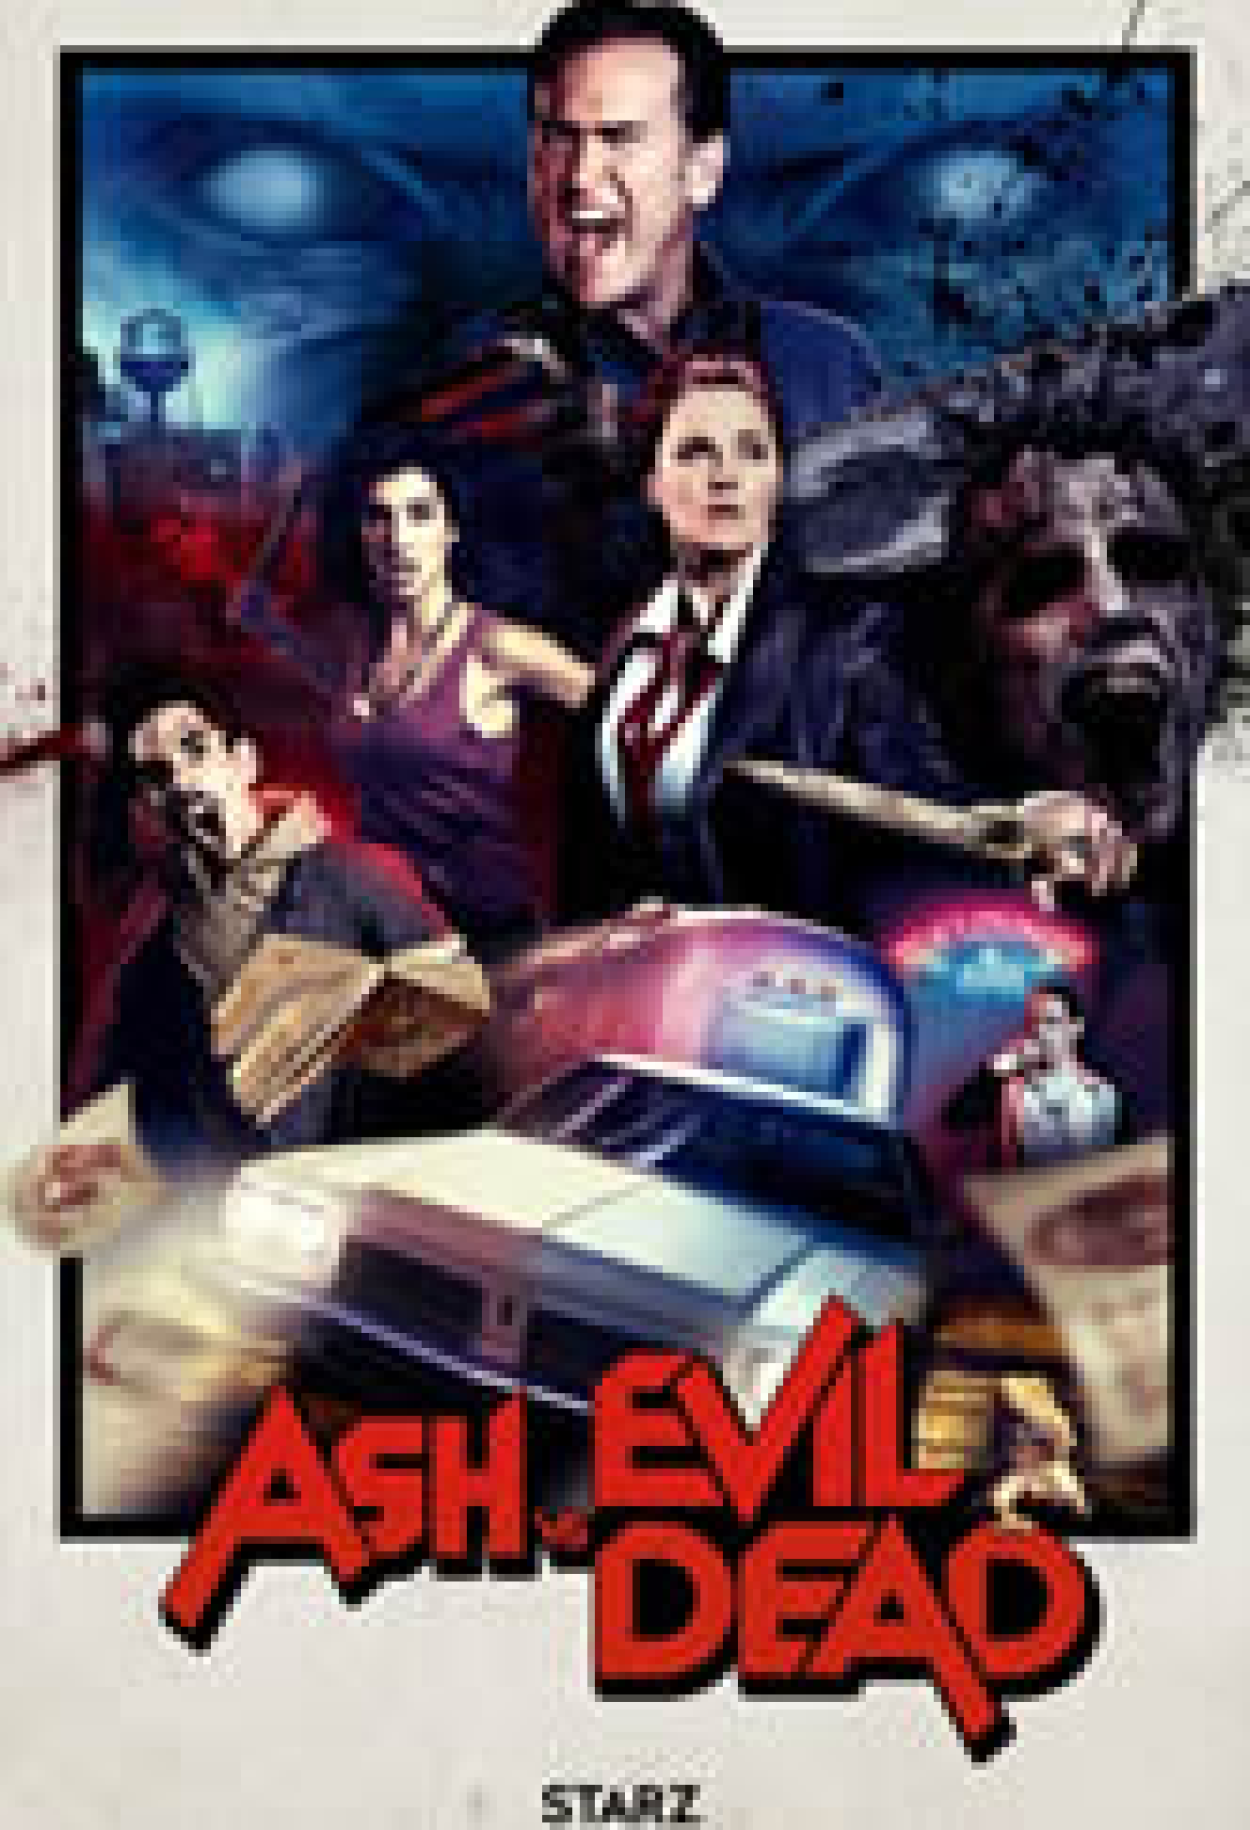 Ash vs Evil Dead (Série), Sinopse, Trailers e Curiosidades - Cinema10